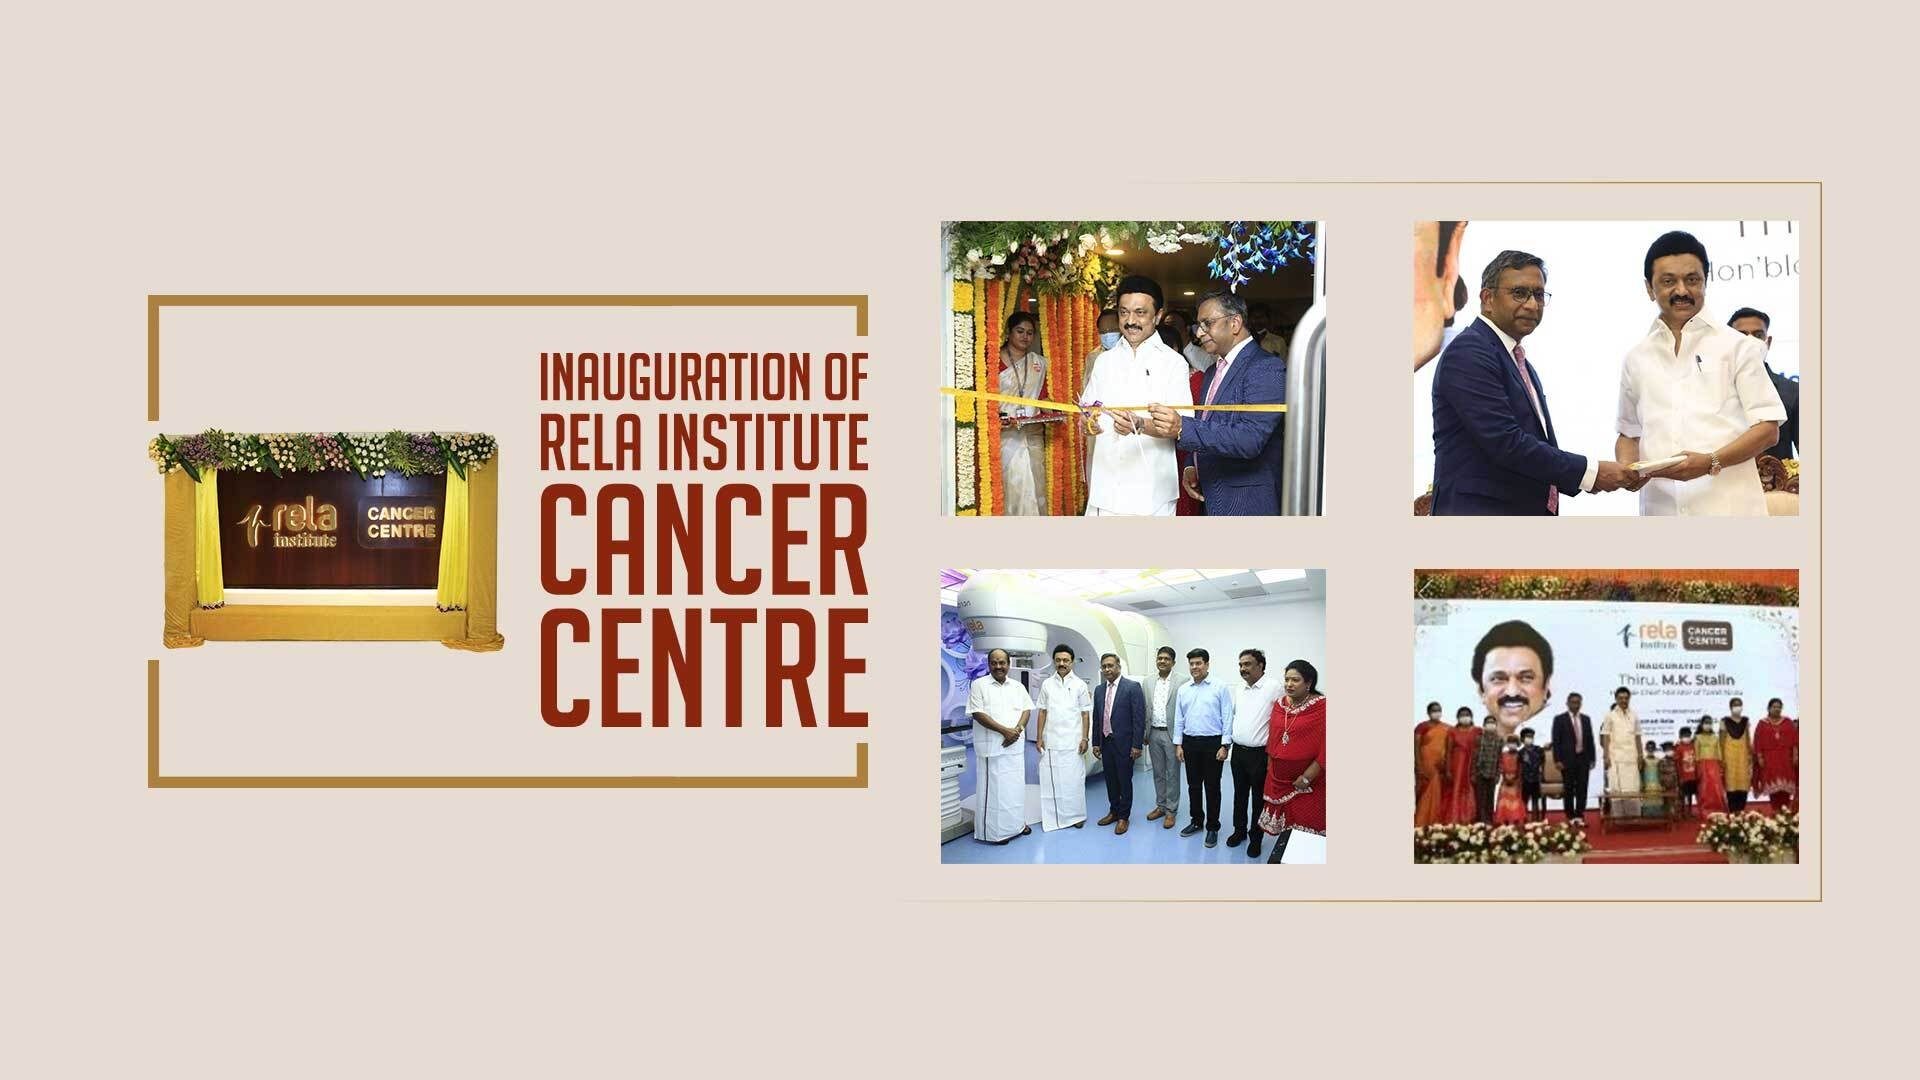 Inauguration of Rela Institute Cancer Centre